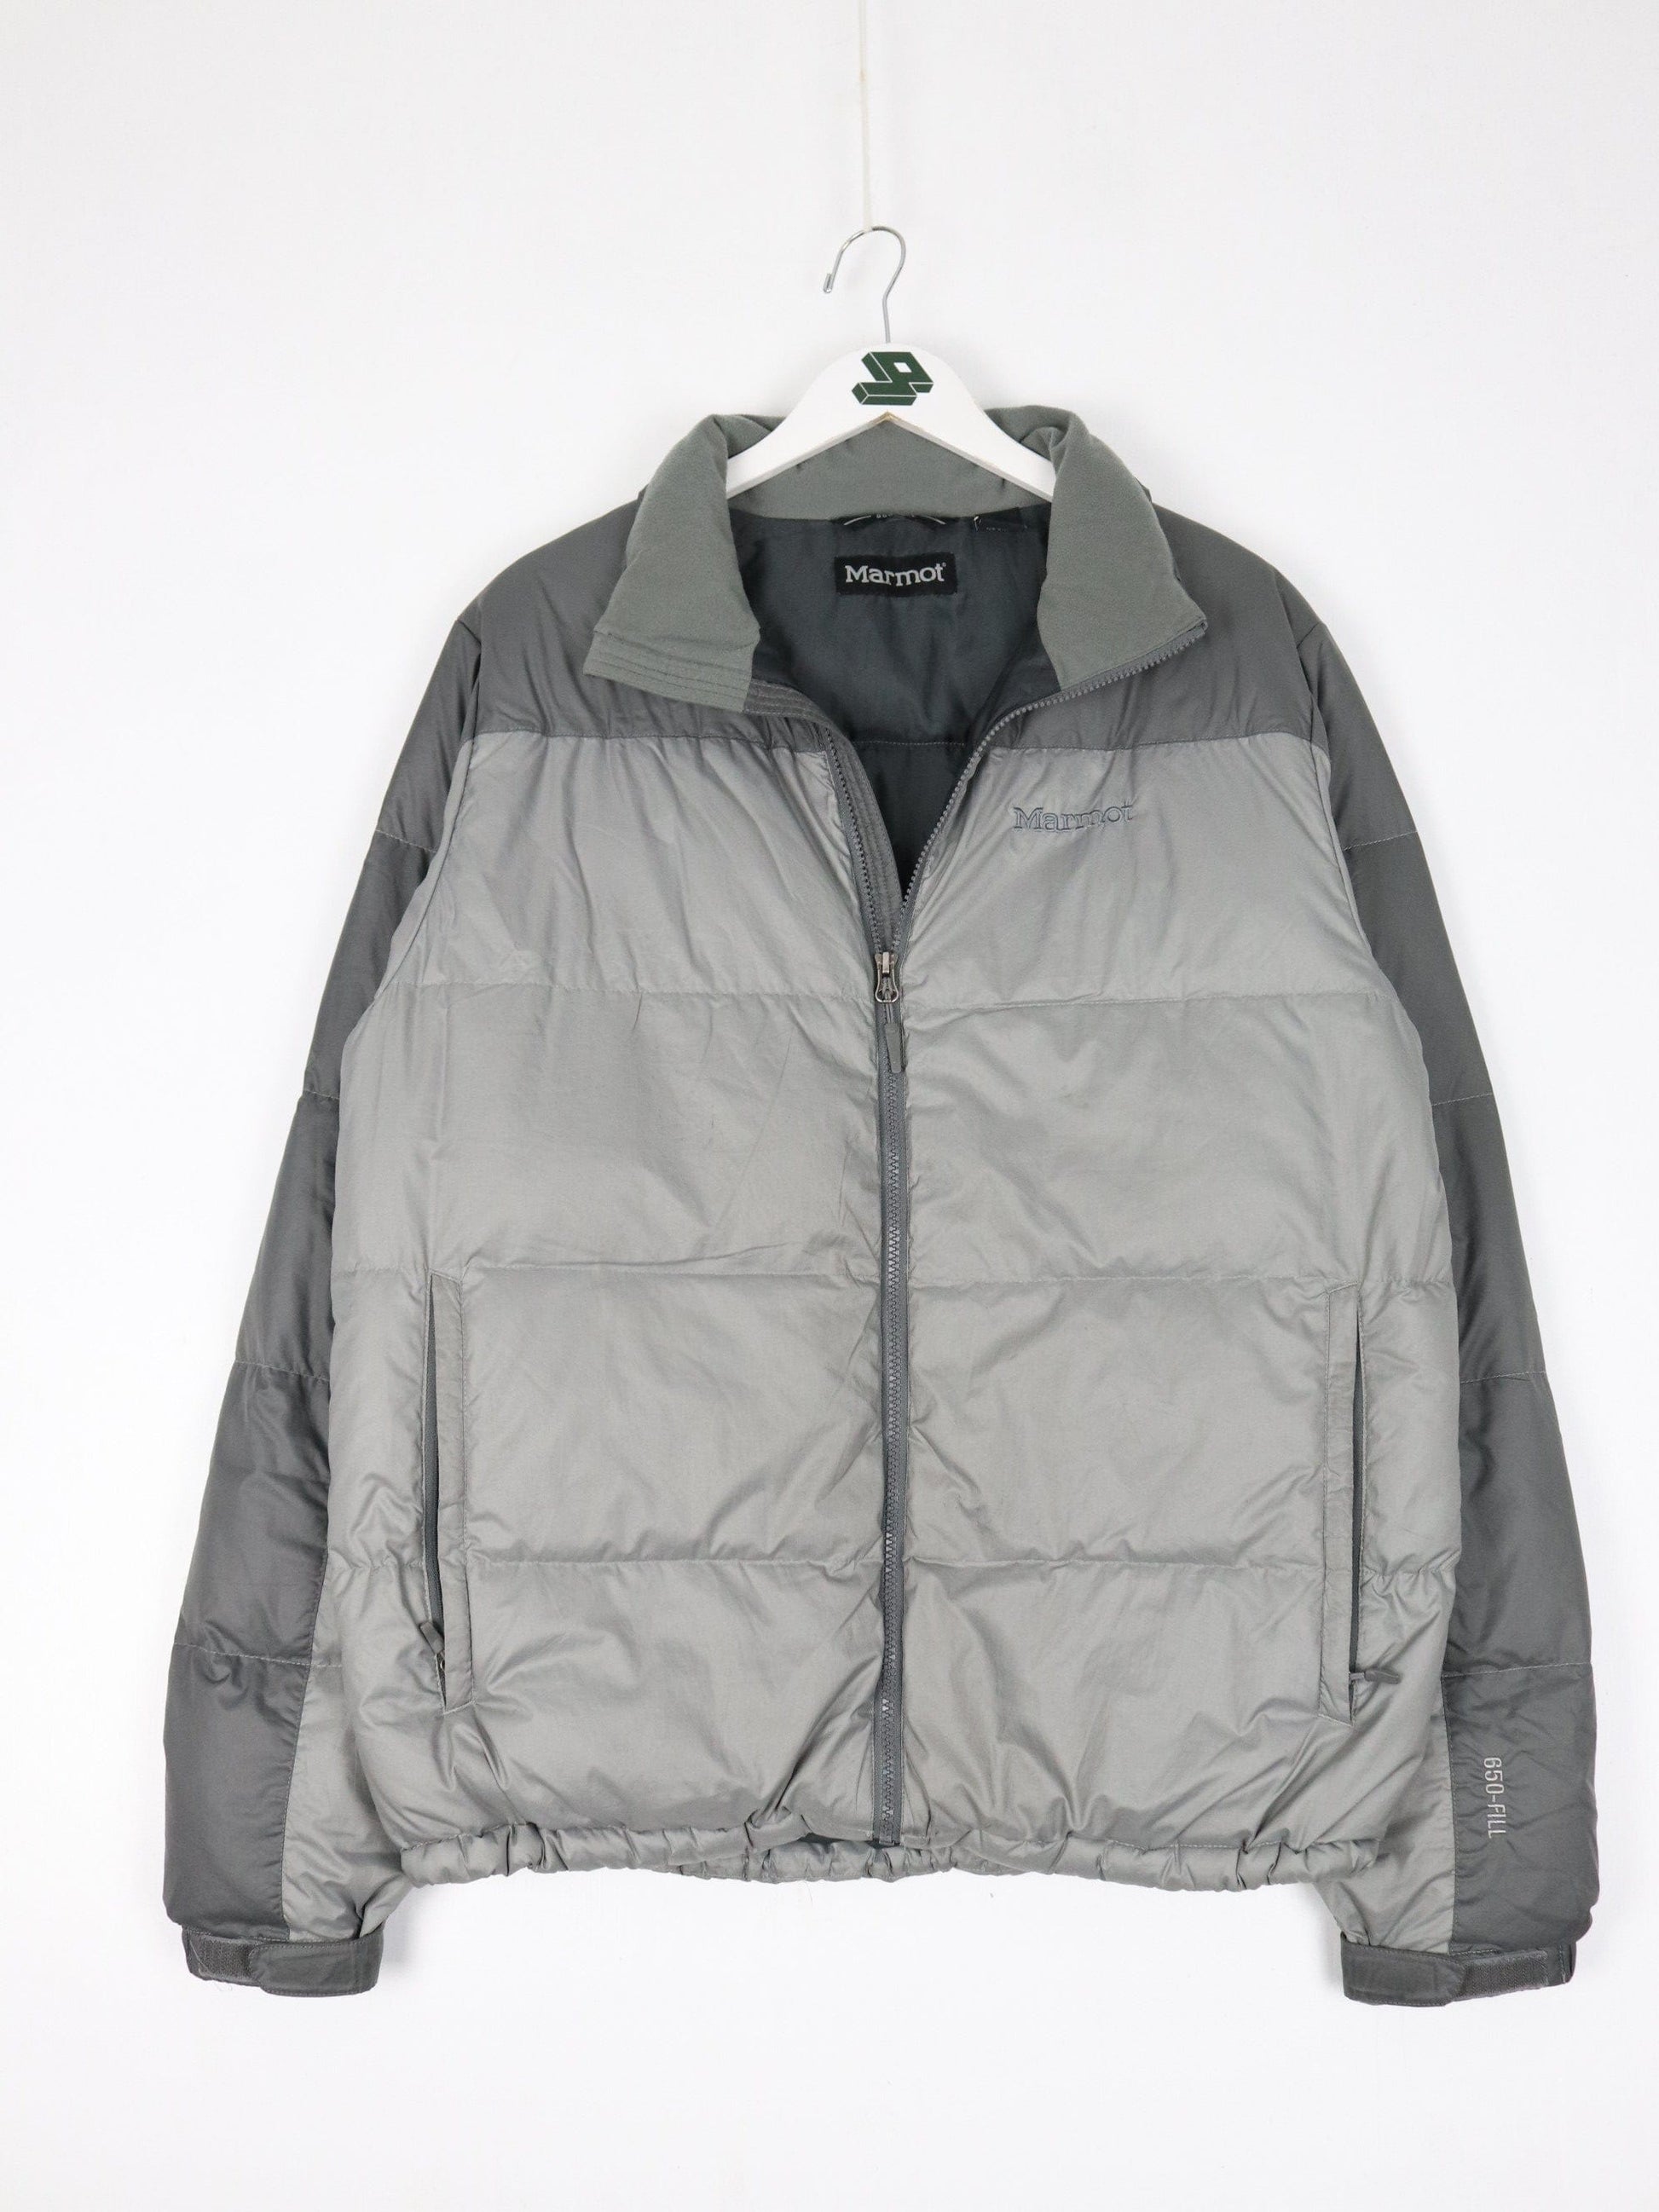 Marmot Jacket Mens Large Grey Puffer Coat 550 Down Outdoors